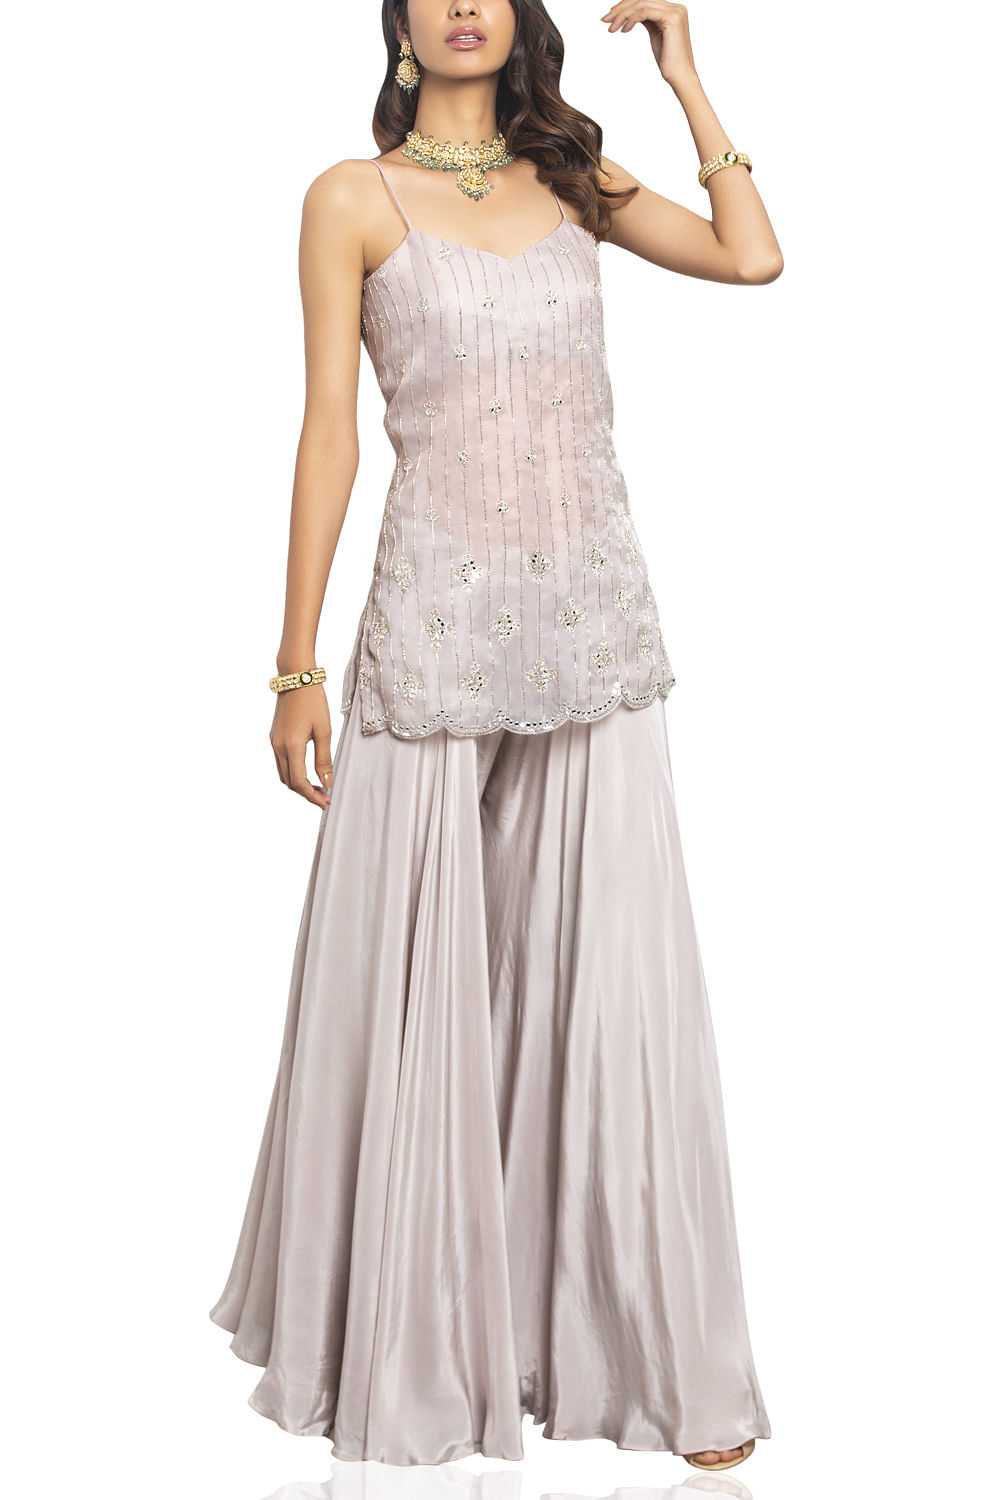 Buy Aarika Girl's Cotton Kurti Palazzo Set (PL-B-6_Green_24) at Amazon.in